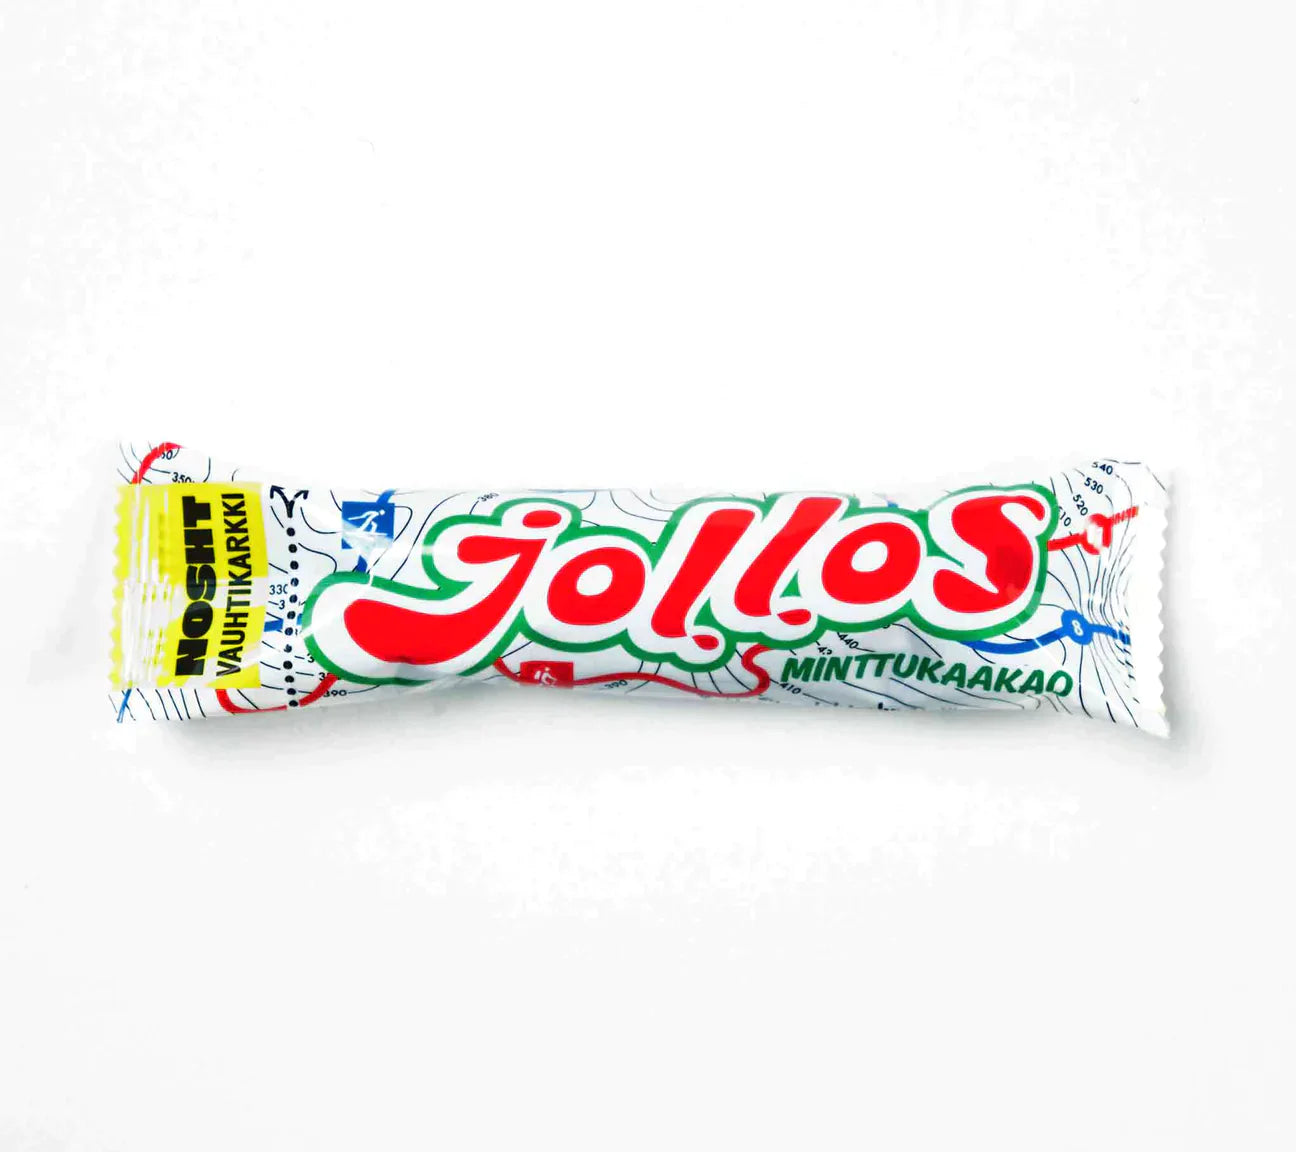 Nosht Jollos Energy Chews - Mint Chocolate - 4 Servings